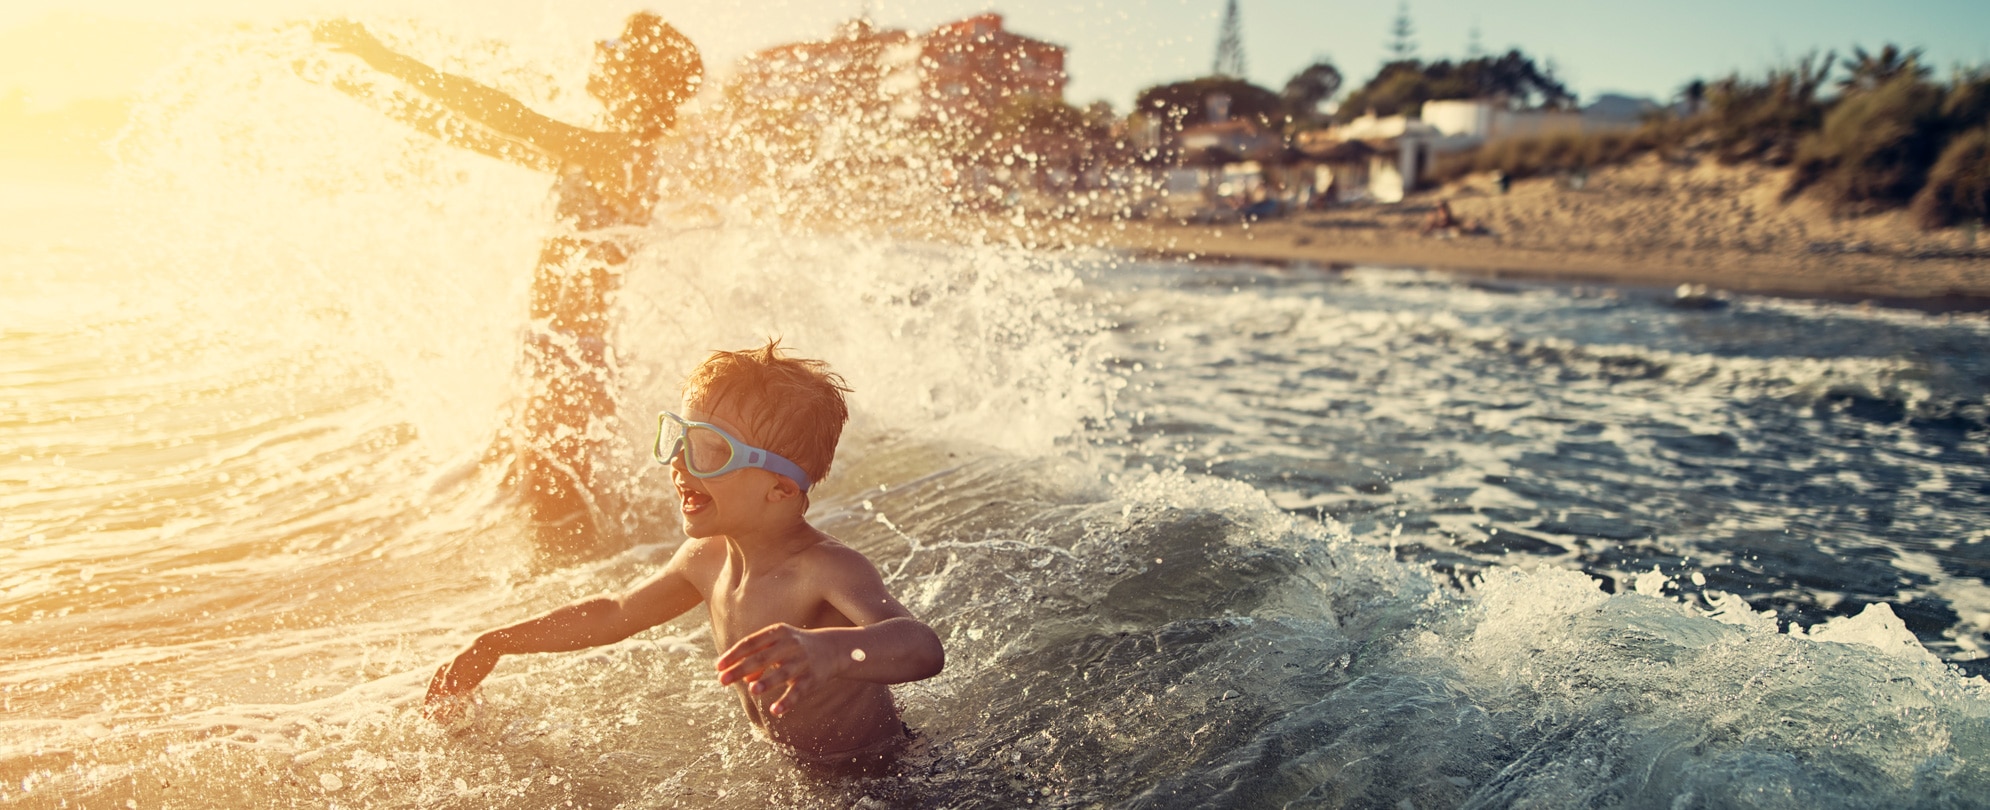 Little boy wearing goggle crashing into an ocean wave 